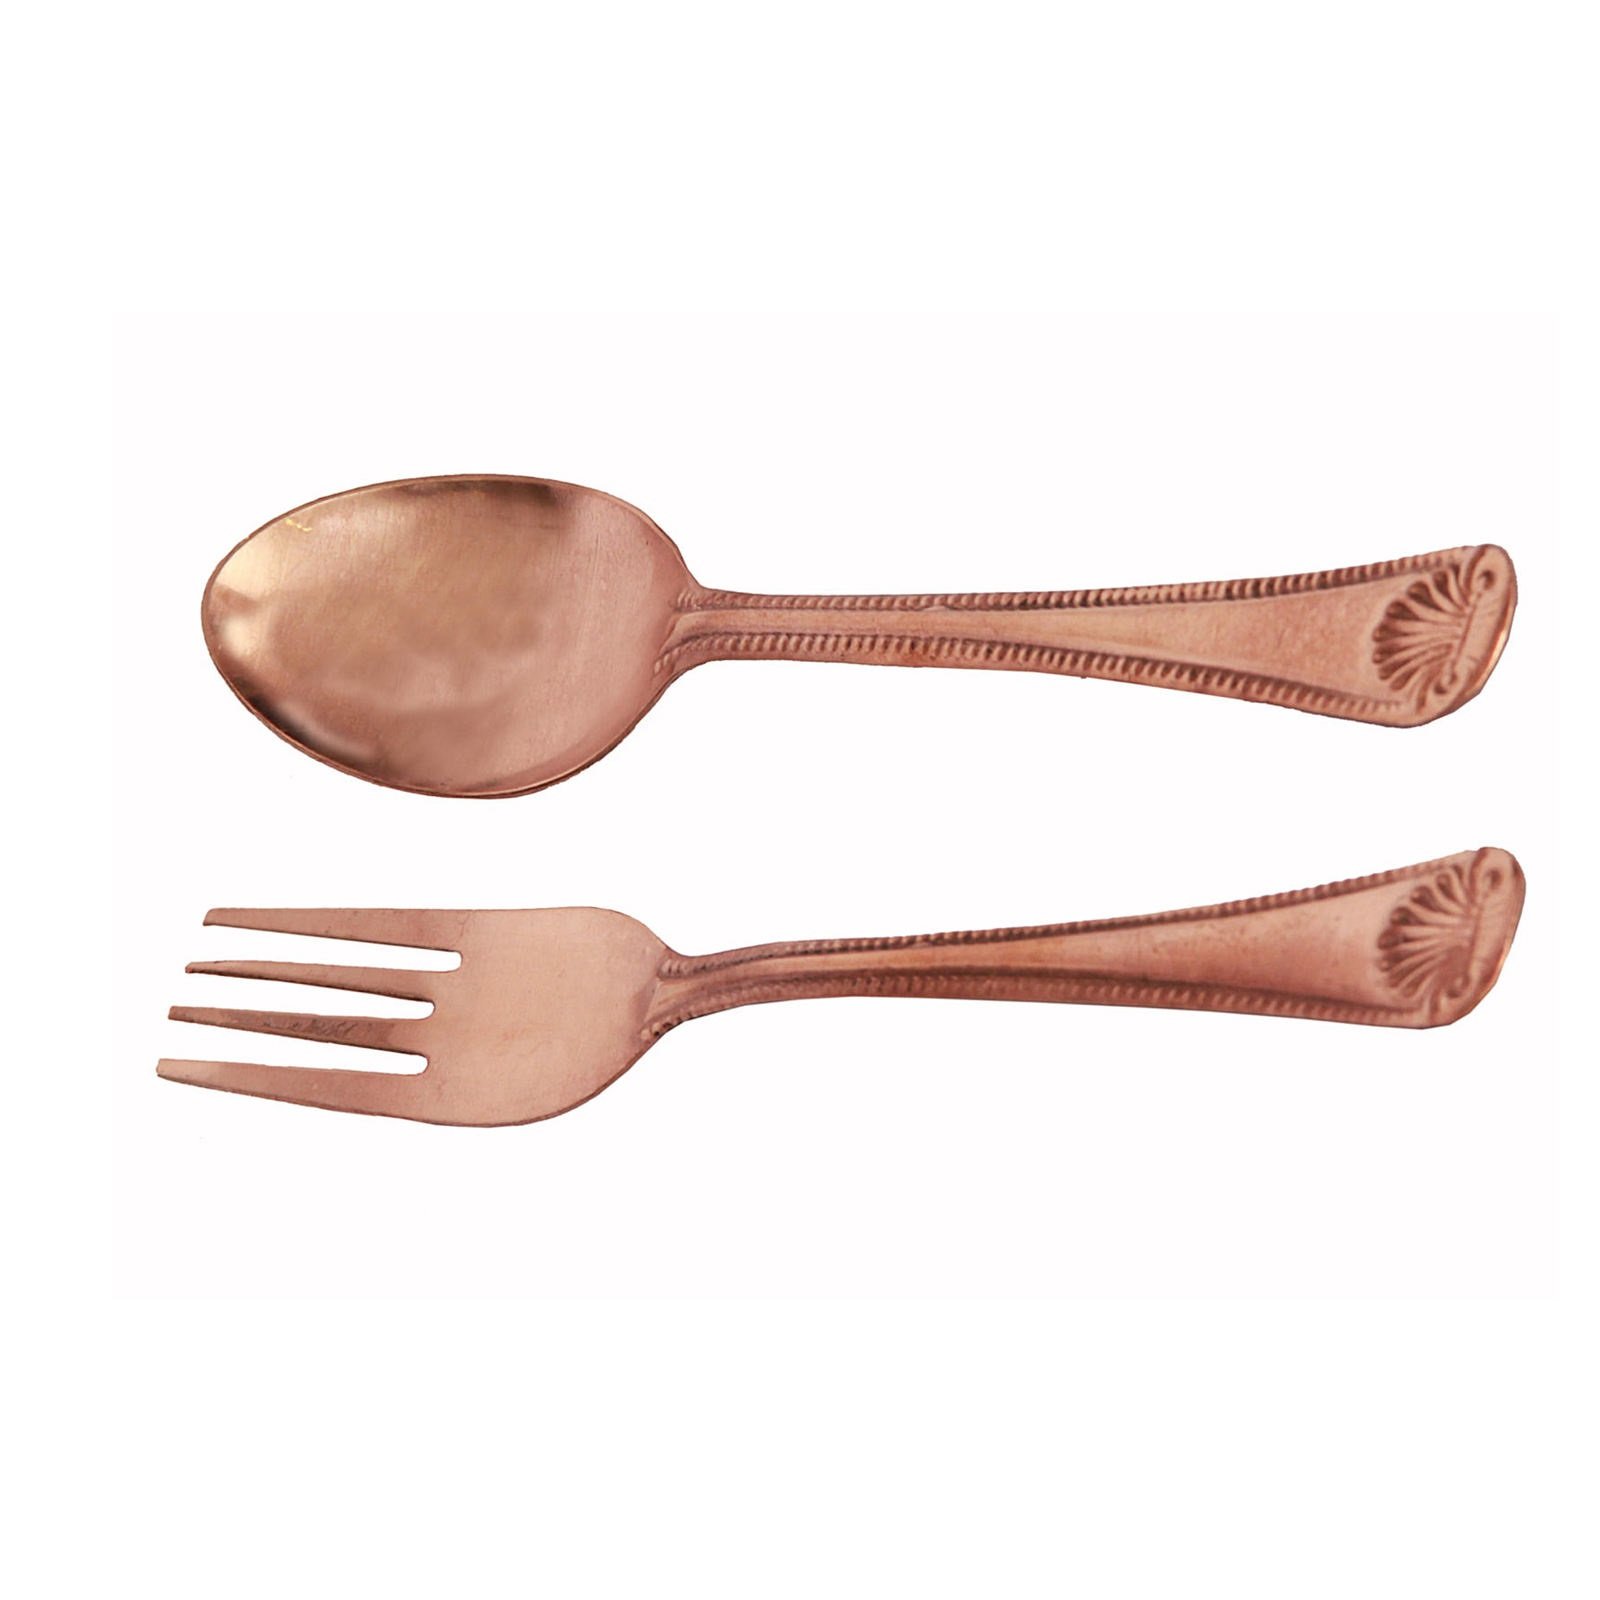 Handicraft Copper spoon and fork code 106,购买 铜,买铜的东西